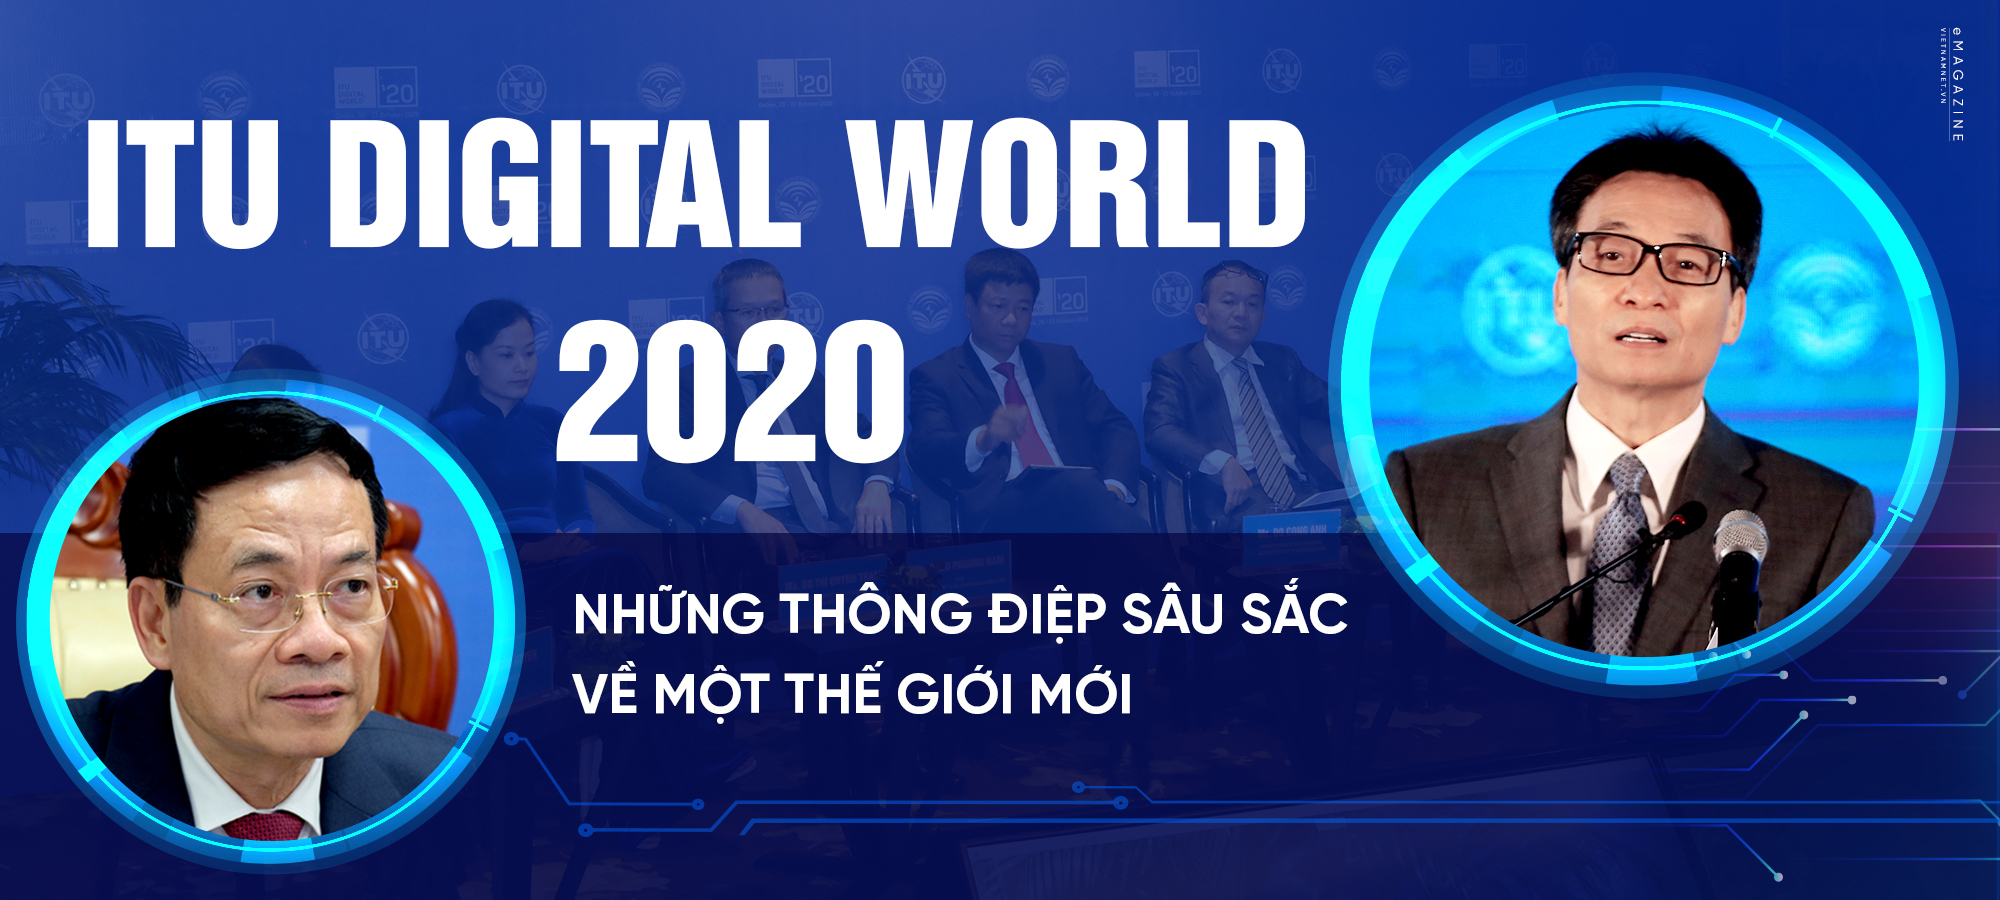 itu-digital-world-2020-nhung-thong-diep-sau-sac-ve-mot-the-gioi-moi-7.jpg